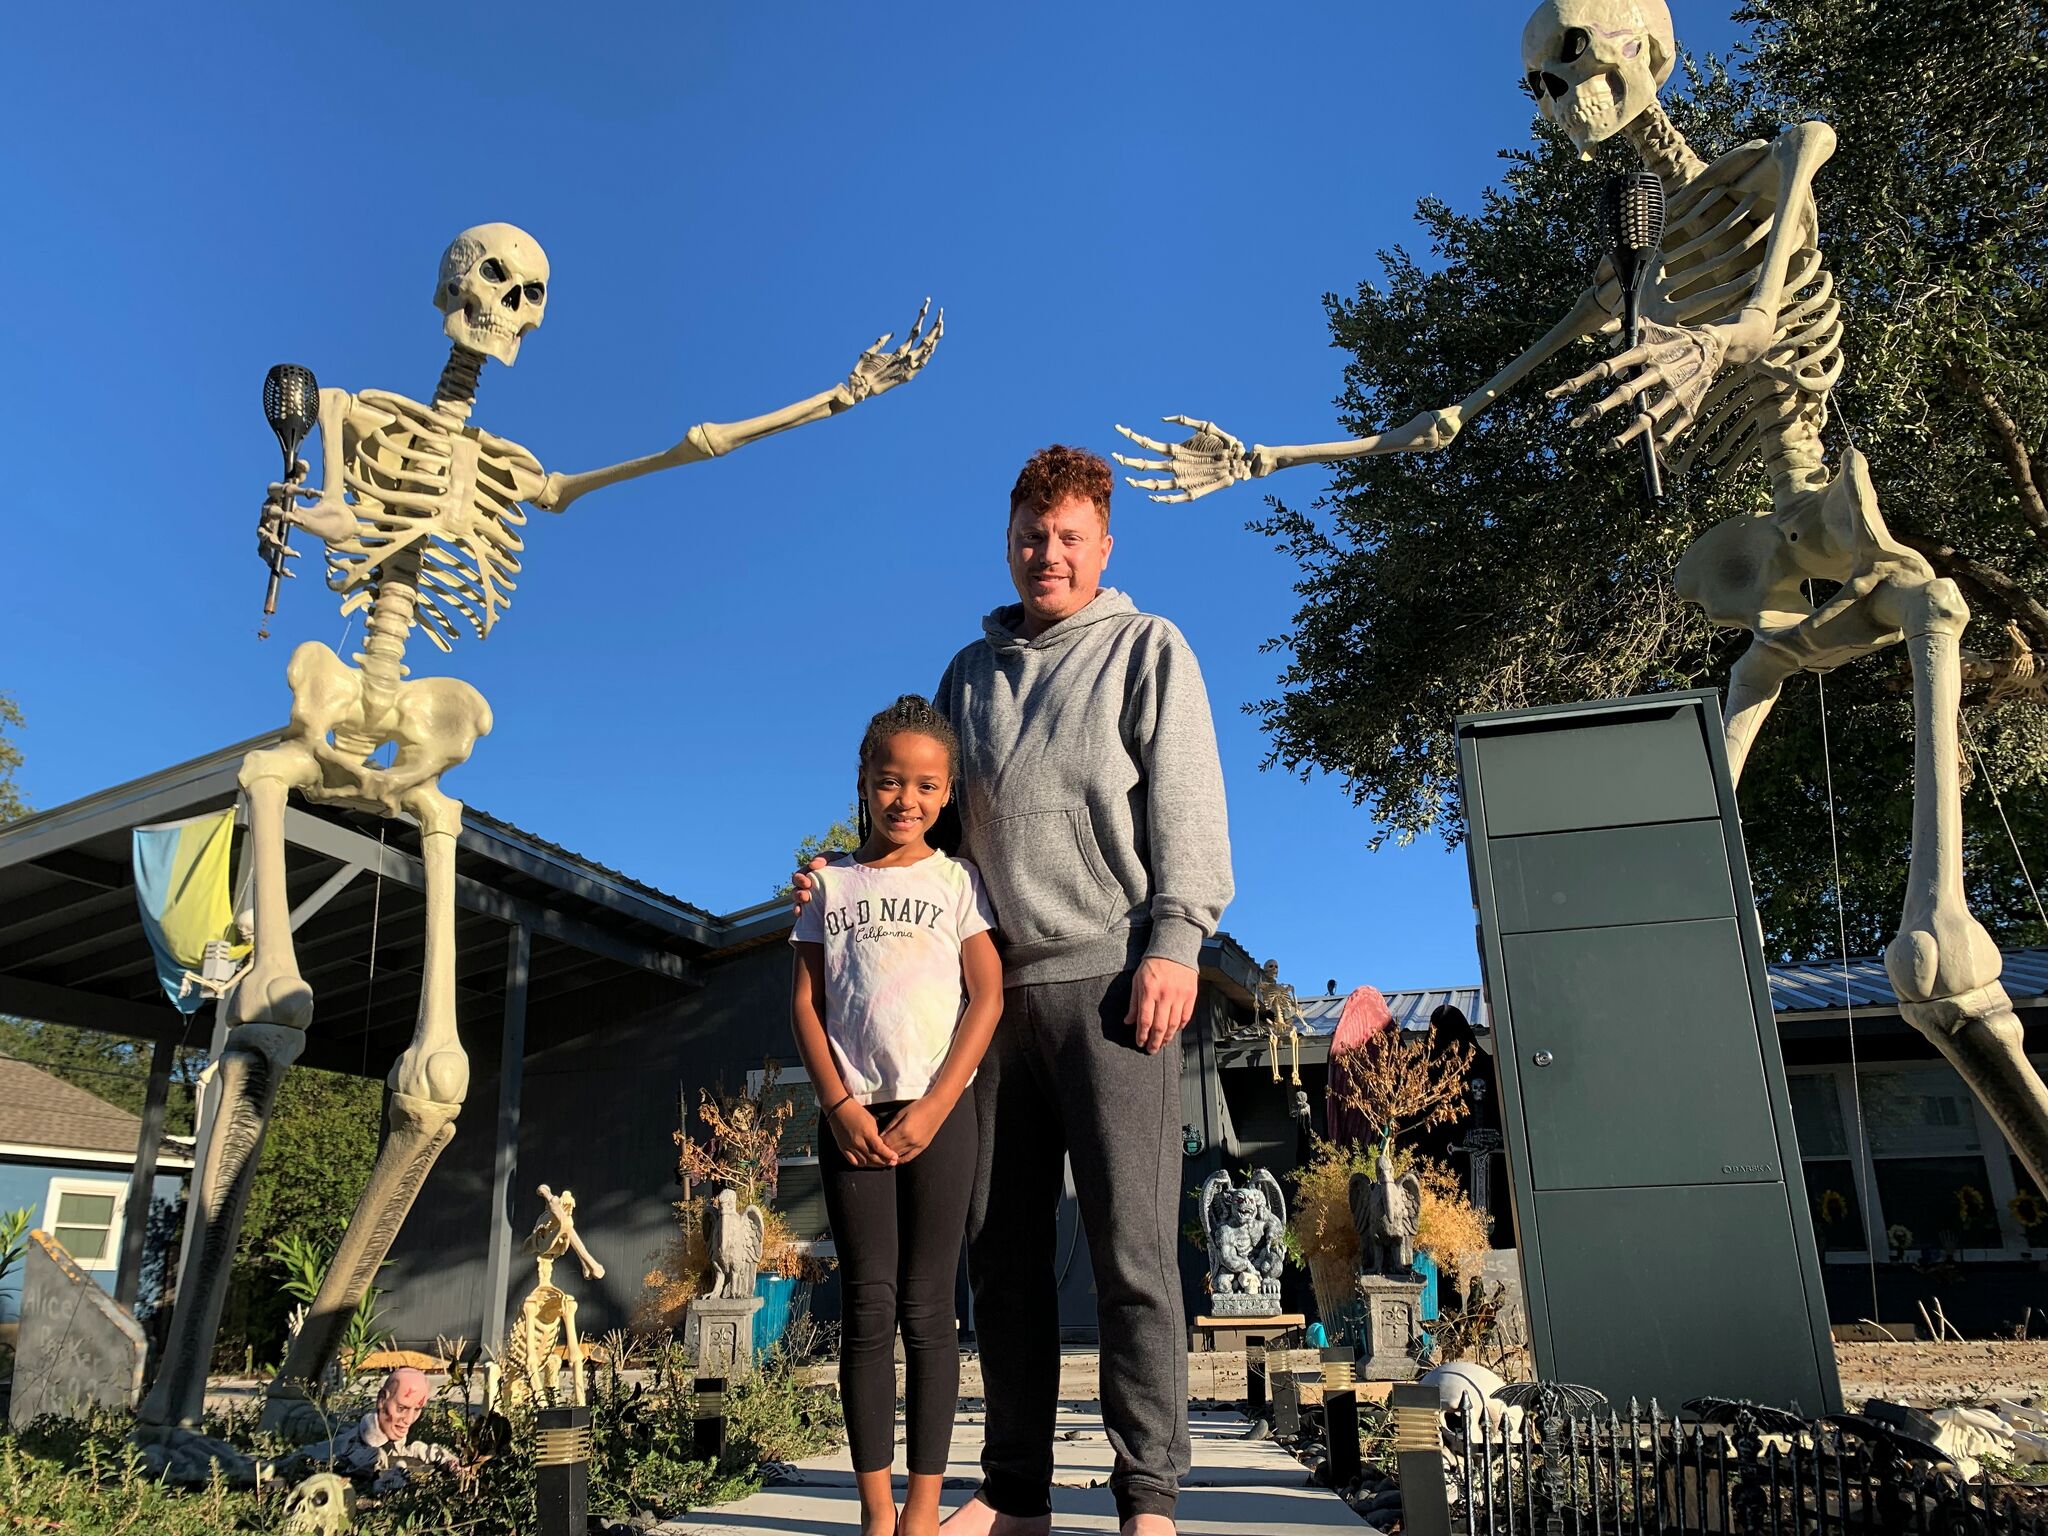 Hot Halloween decoration: No bones about it, 12-foot skeletons